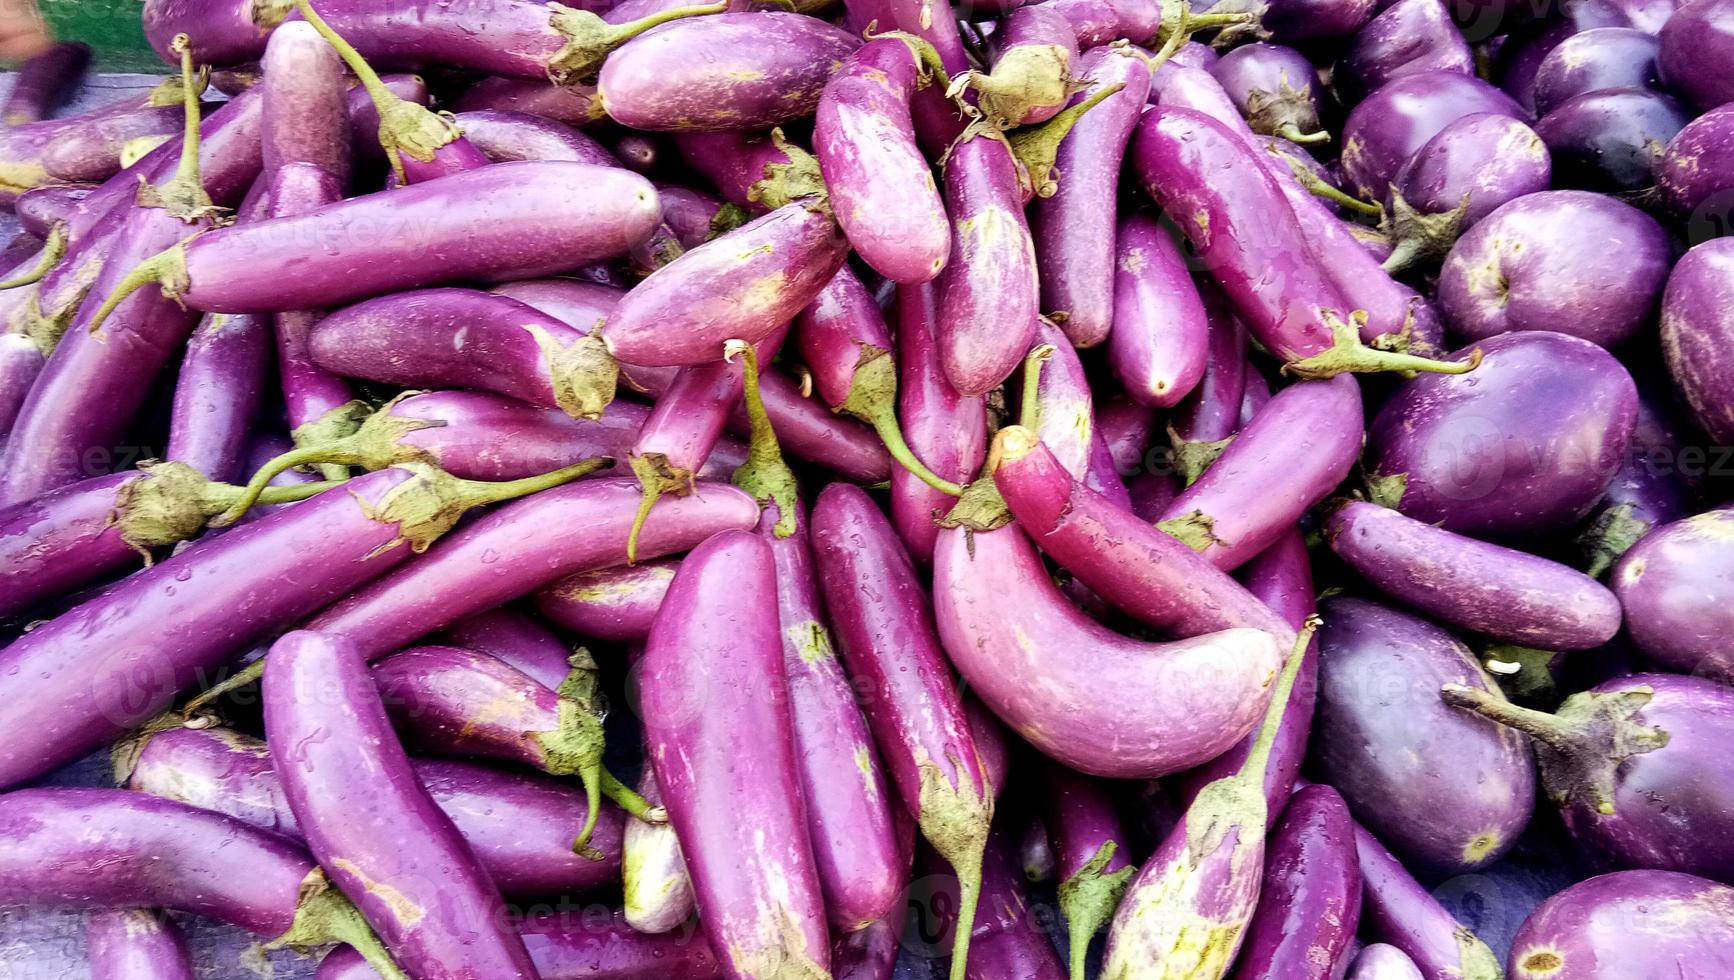 Long fresh organic raw purple brinjal or eggplant or aubergine in market. photo